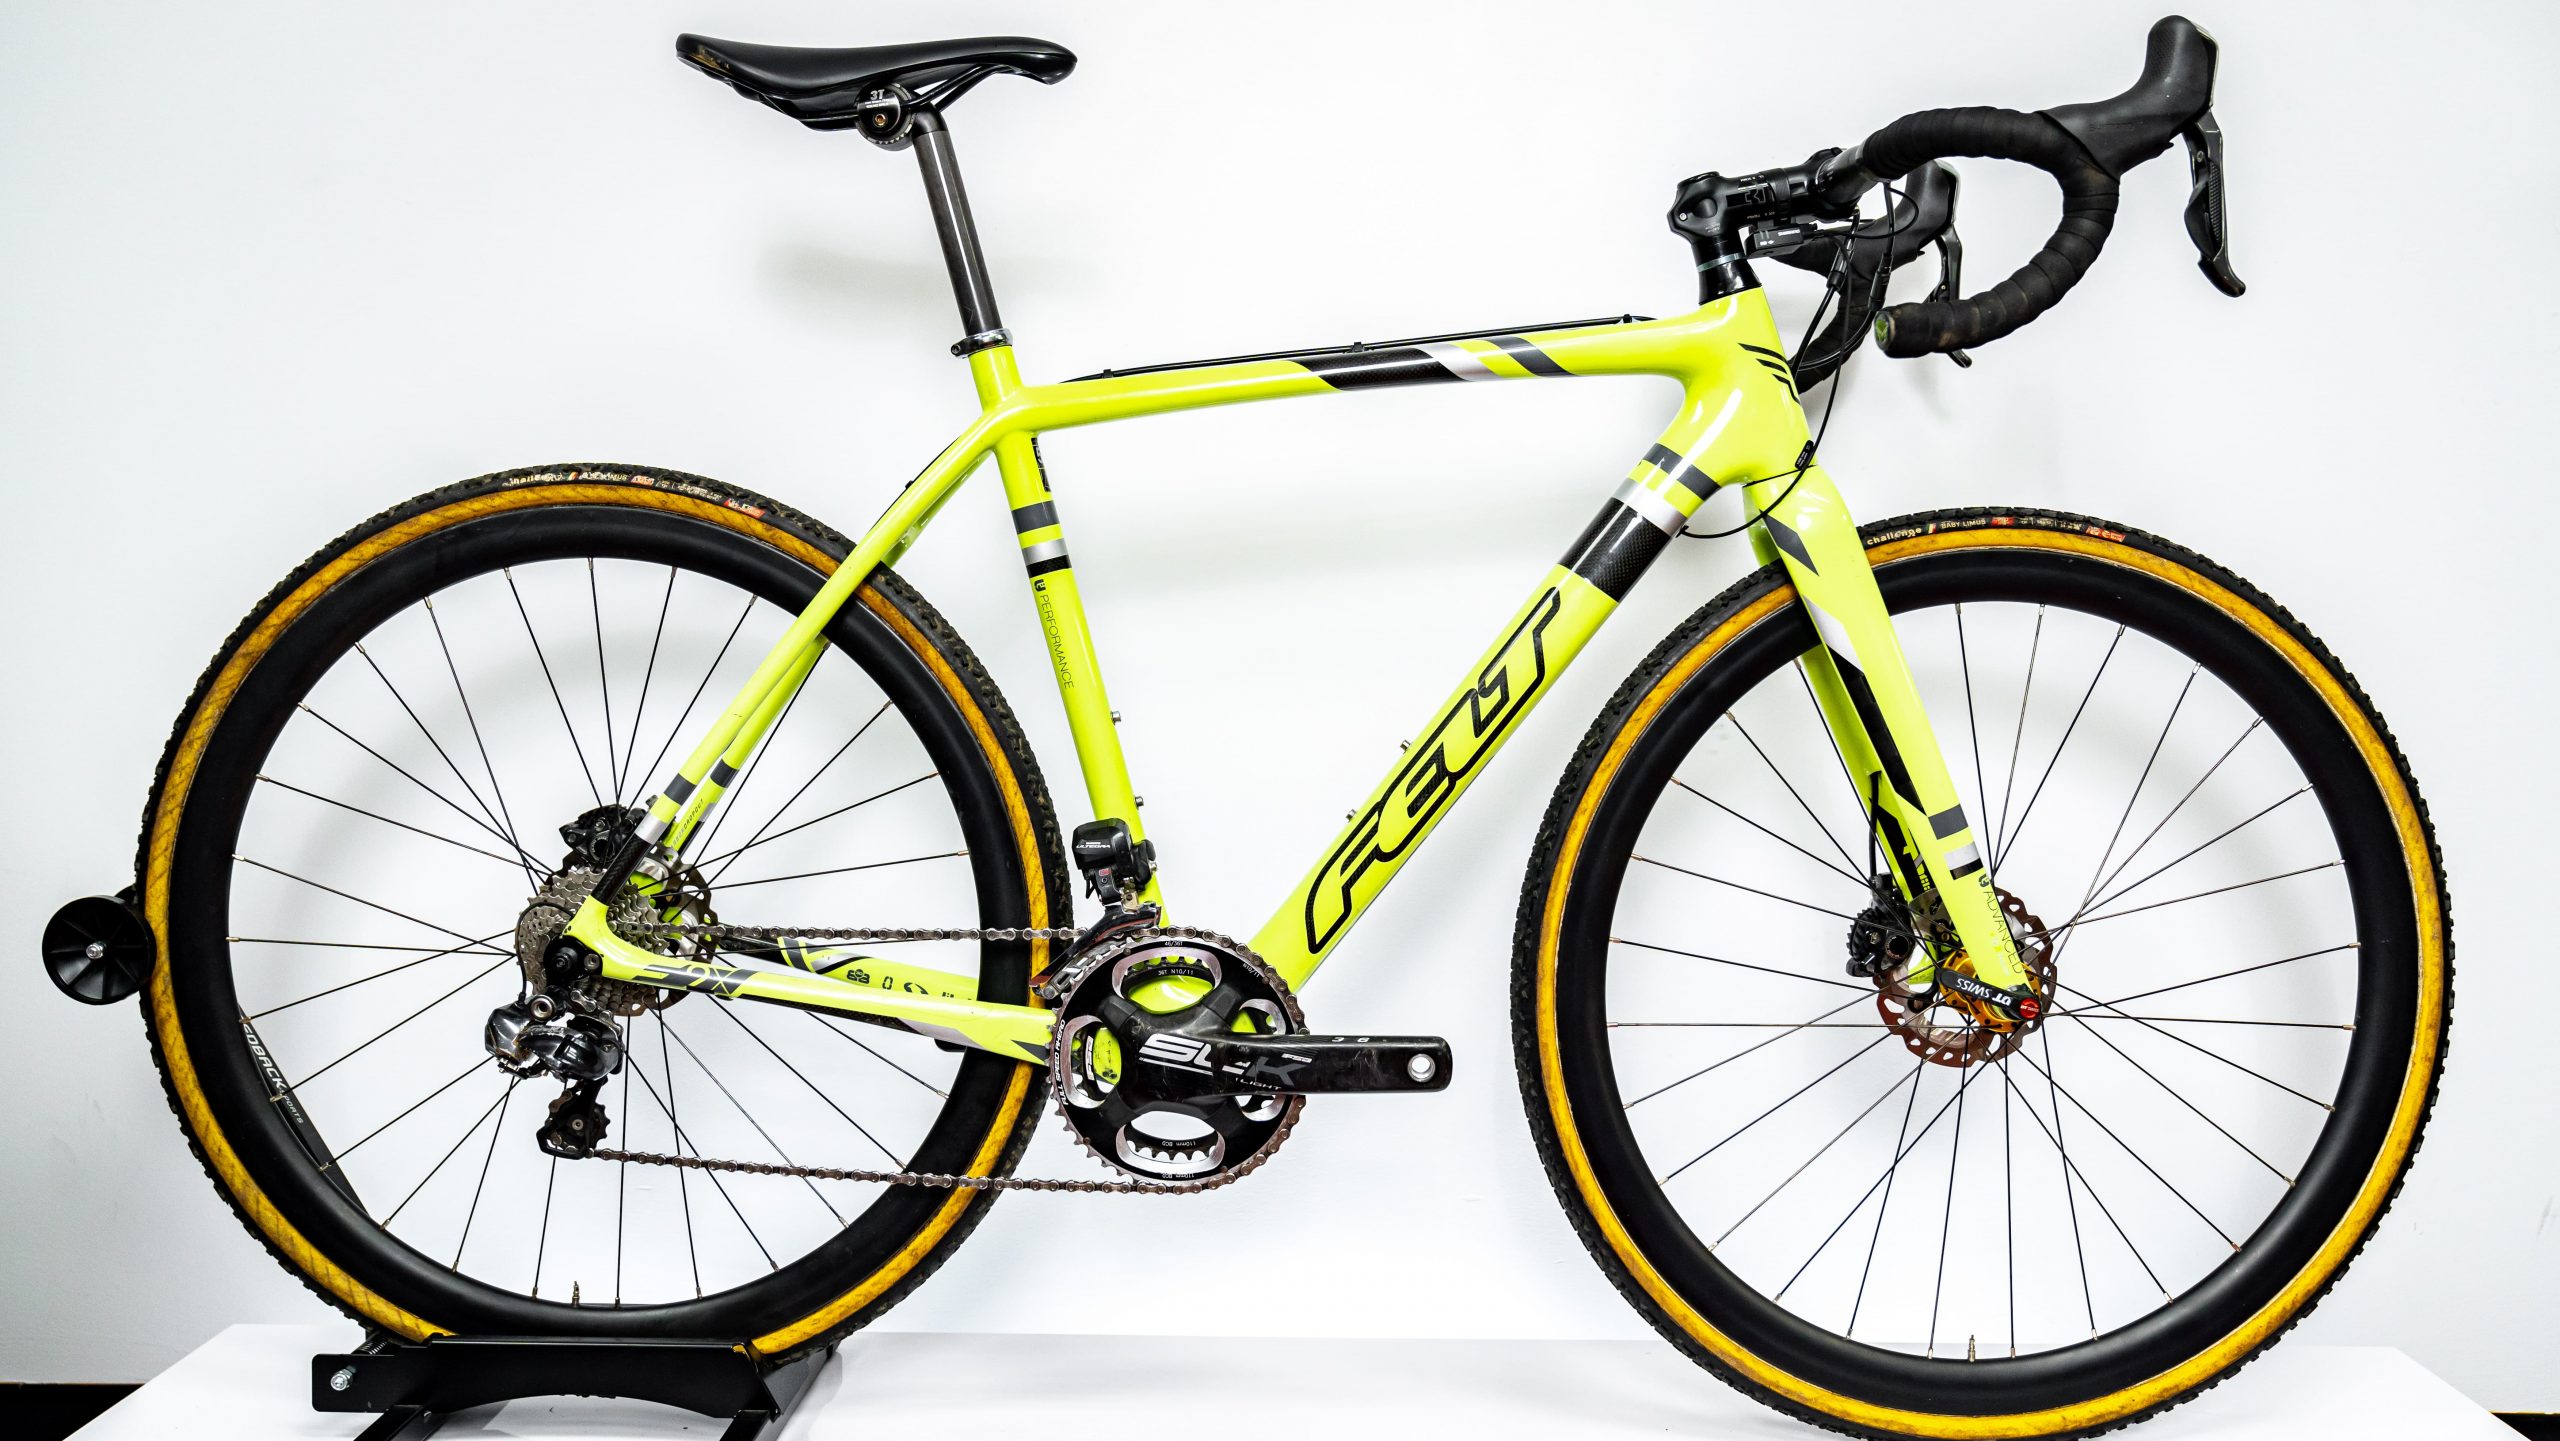 2015 Felt F2X Di2 Cyclocross Bike (53cm) - $1600